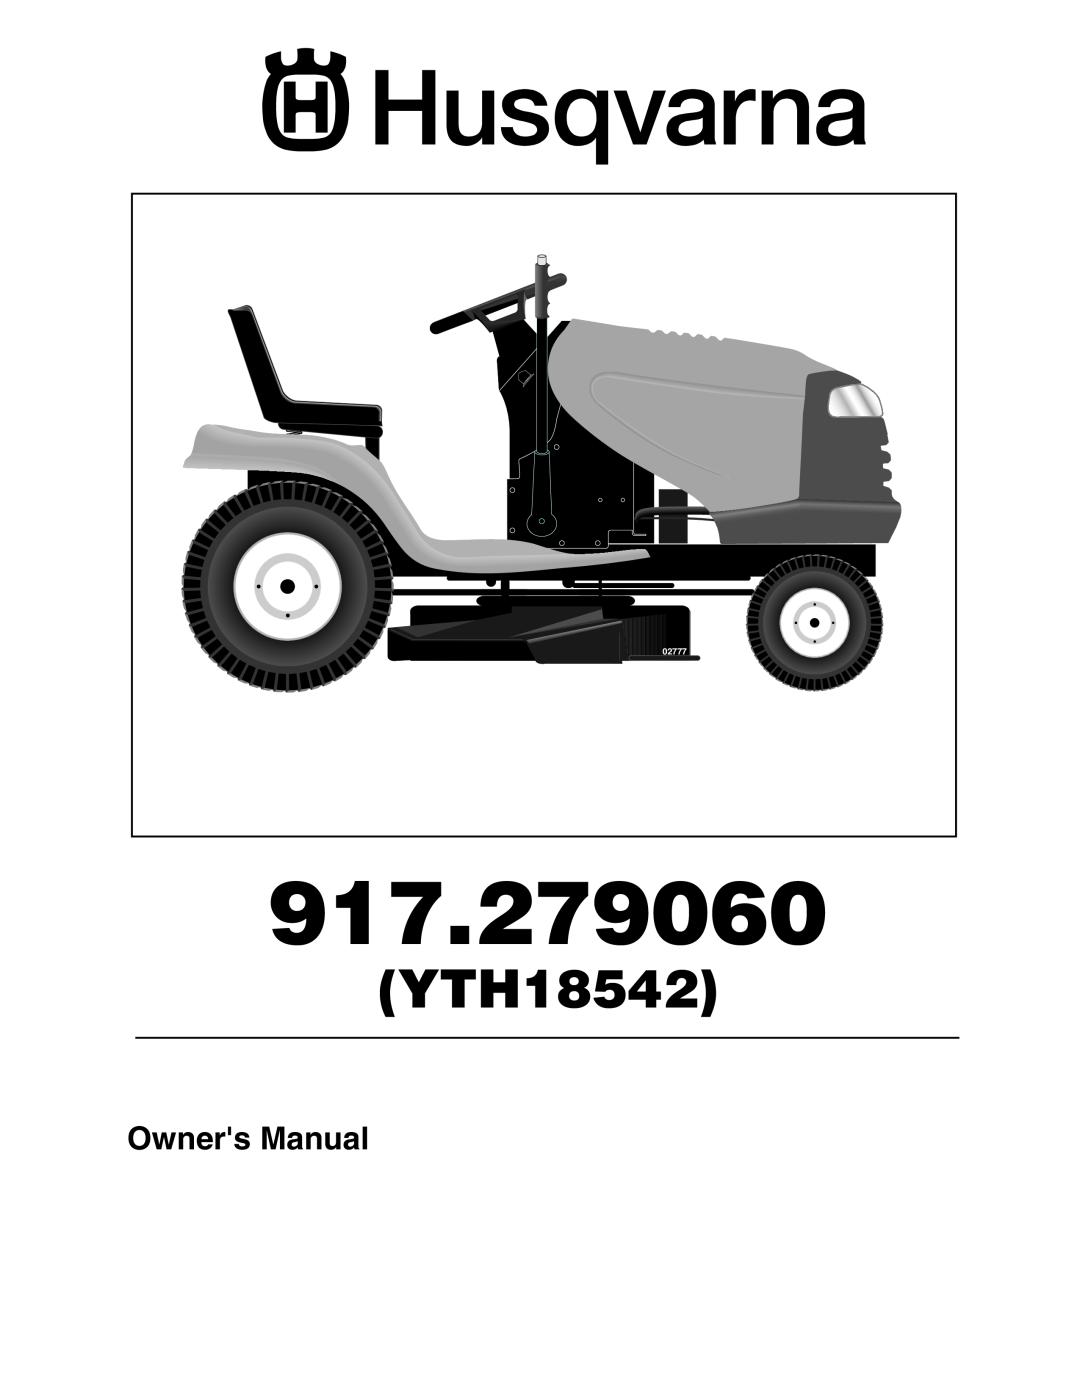 Husqvarna YTH18542 owner manual 917.279060, 02777 